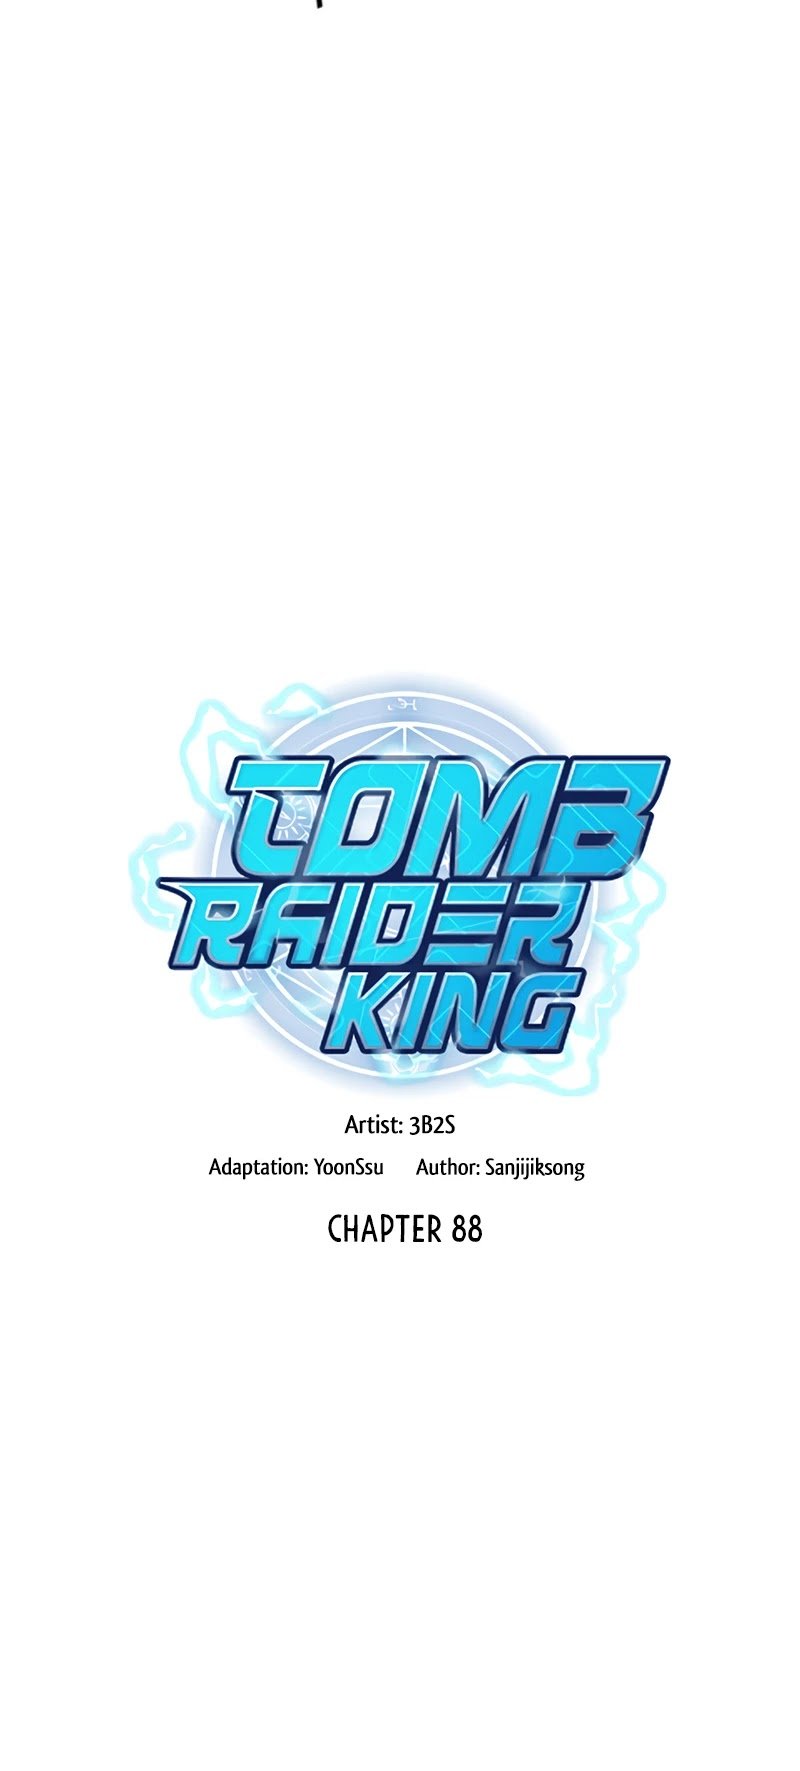 tomb-raider-king-chap-88-6